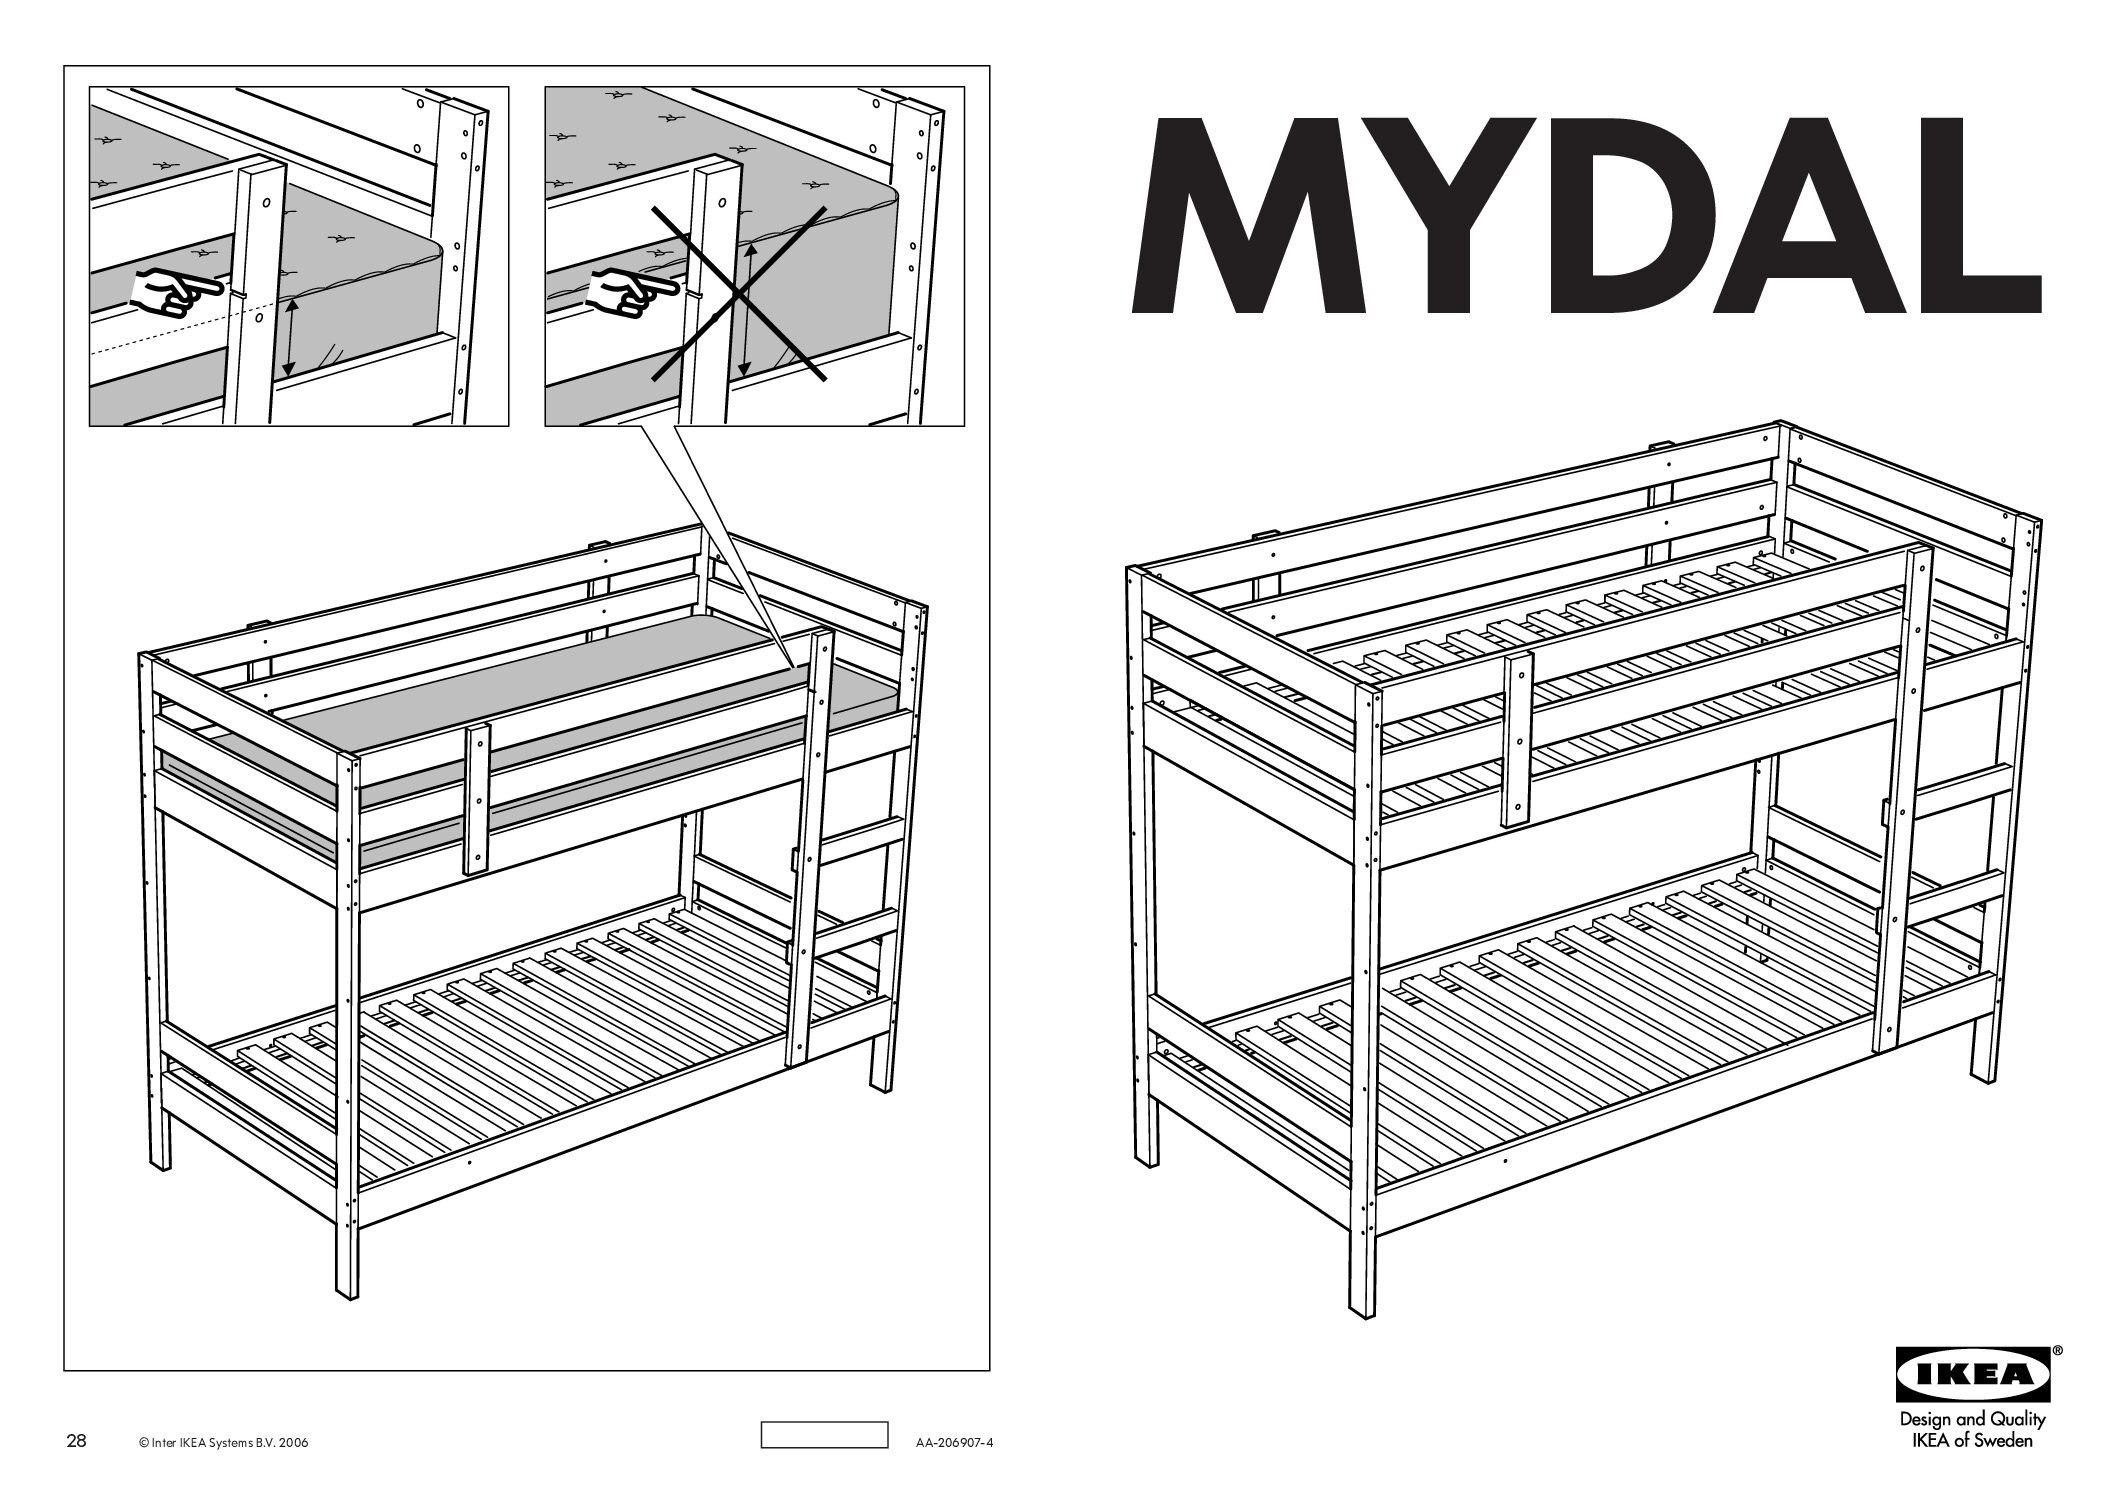 Ikea Mydal stapelbed Bedienungsanleitung